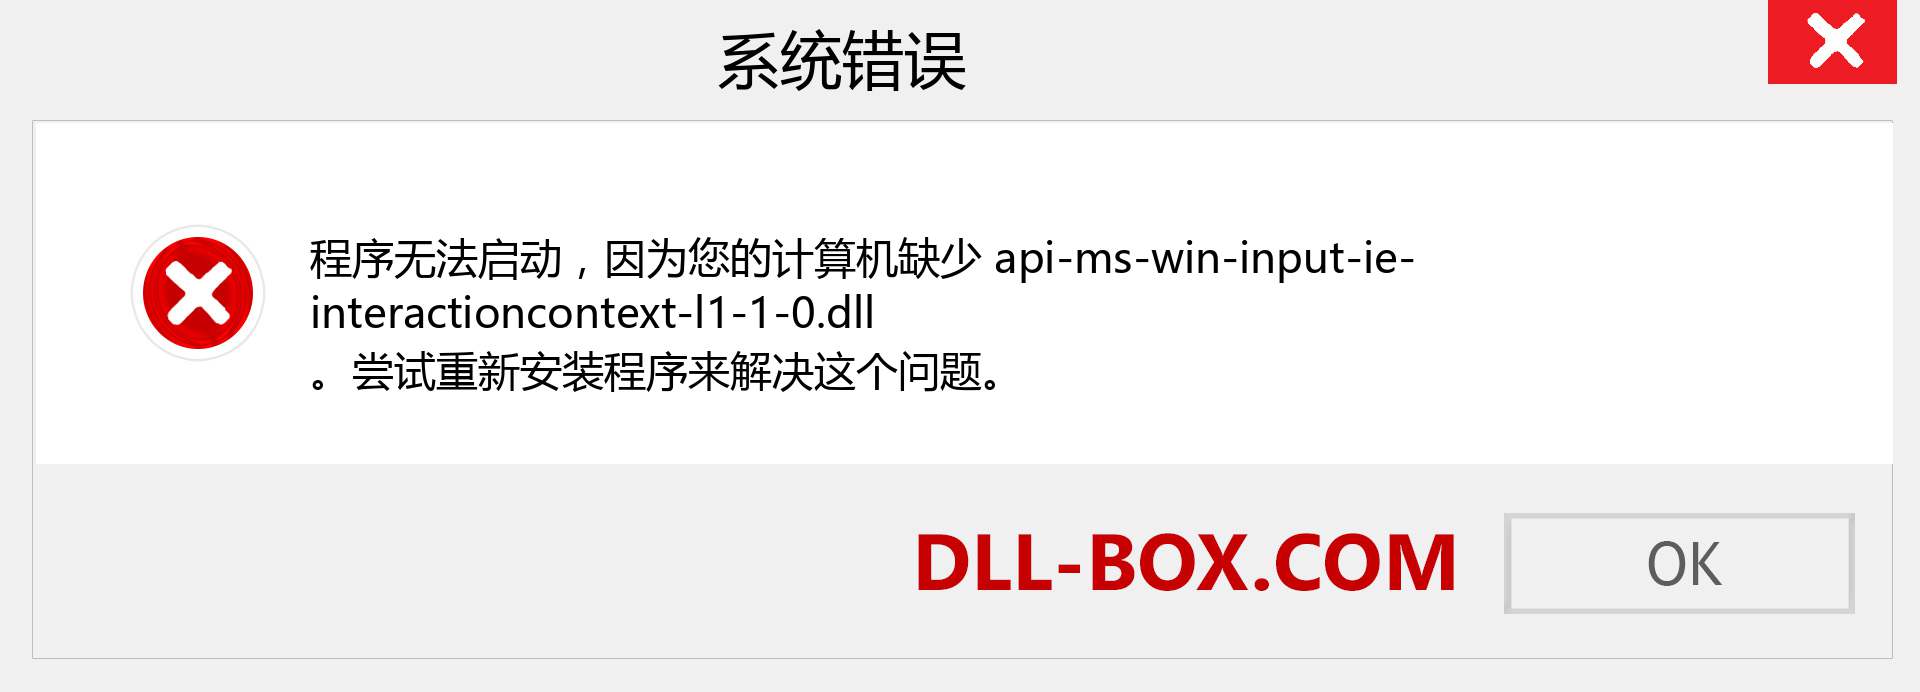 api-ms-win-input-ie-interactioncontext-l1-1-0.dll 文件丢失？。 适用于 Windows 7、8、10 的下载 - 修复 Windows、照片、图像上的 api-ms-win-input-ie-interactioncontext-l1-1-0 dll 丢失错误